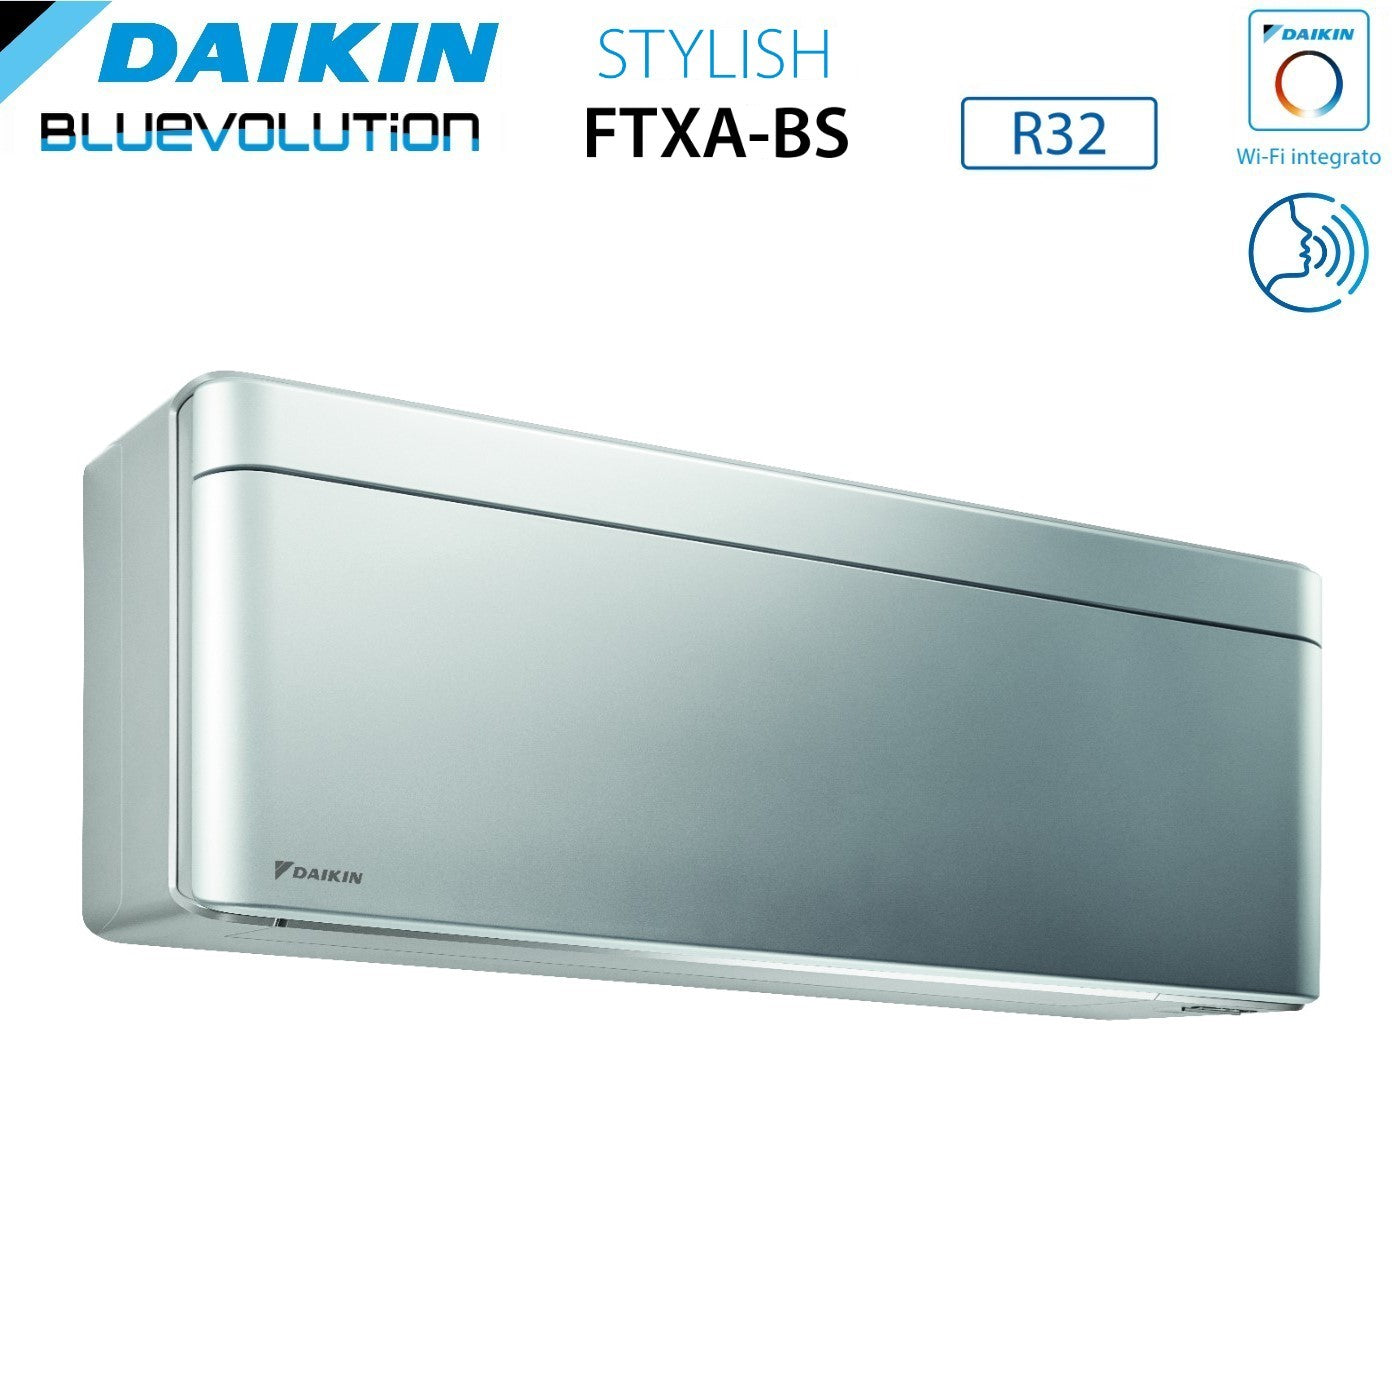 R-32, The Most Balanced Refrigerant, Benefits of Daikin Technology